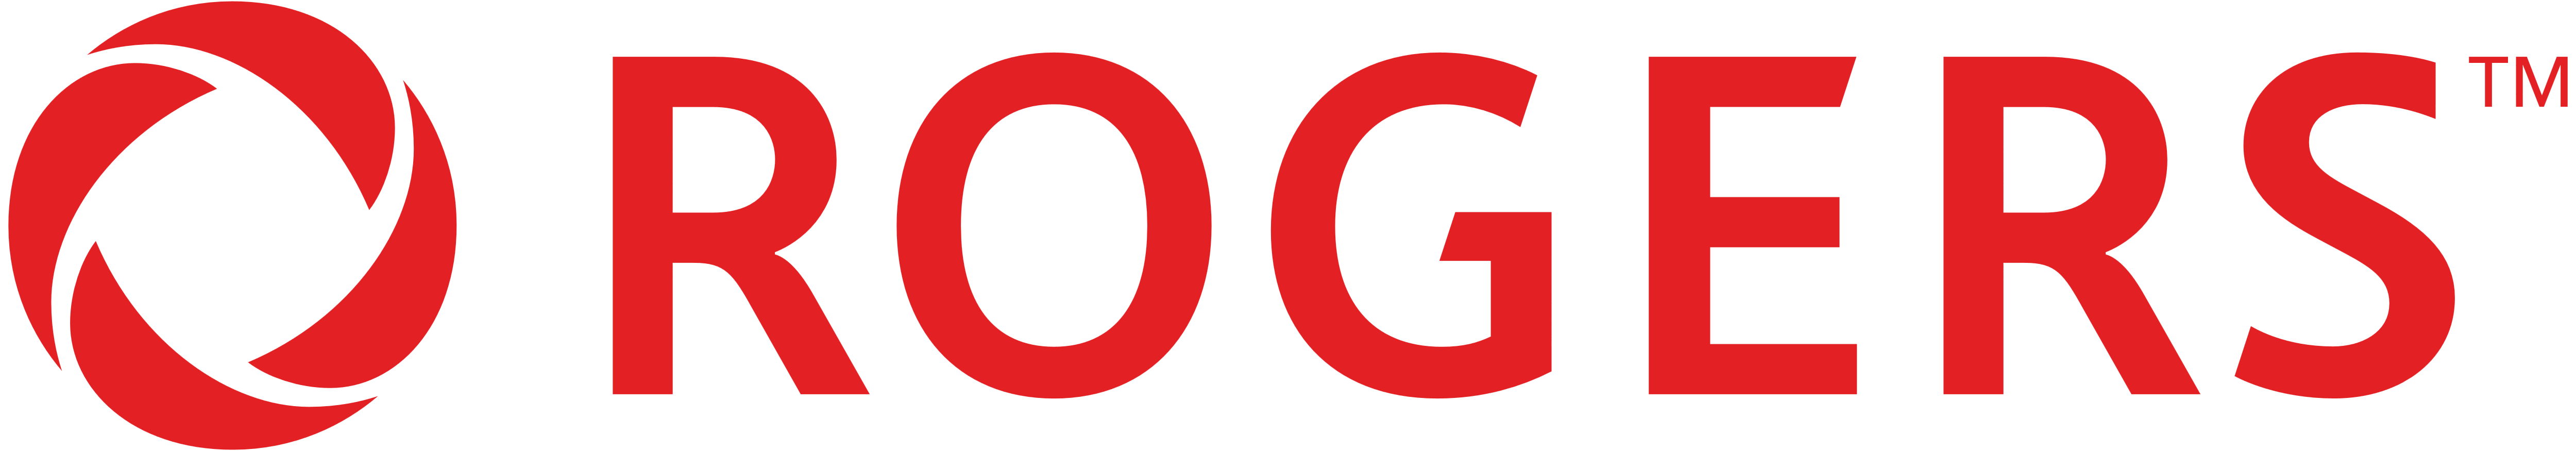 rogers-logos-download